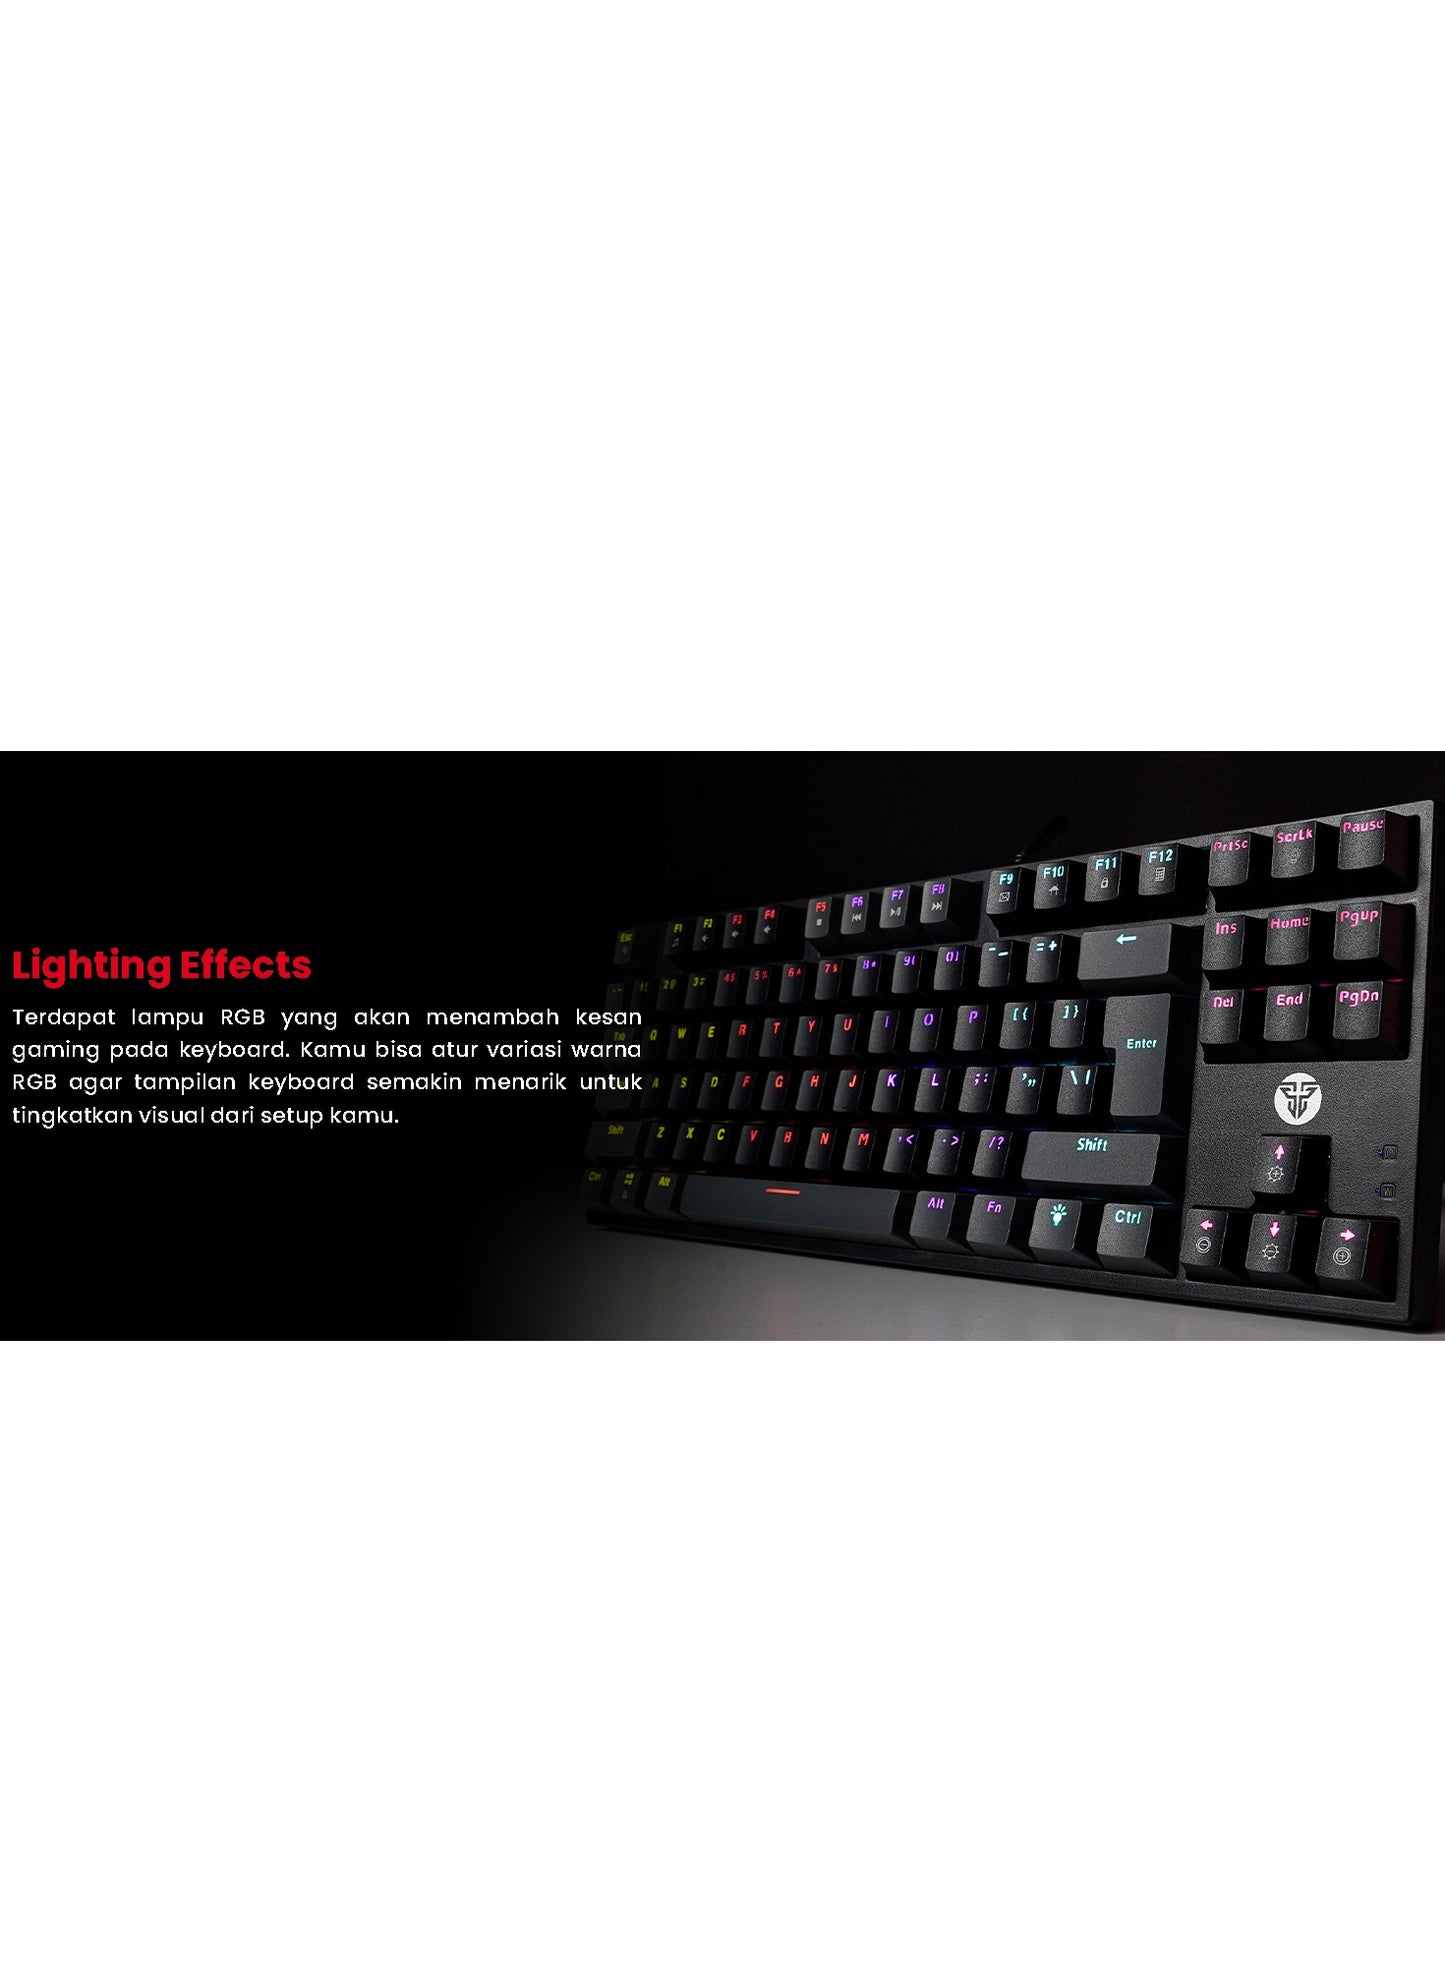 FANTECH MK876 RGB Gaming Mechanical Keyboard , Red Switch